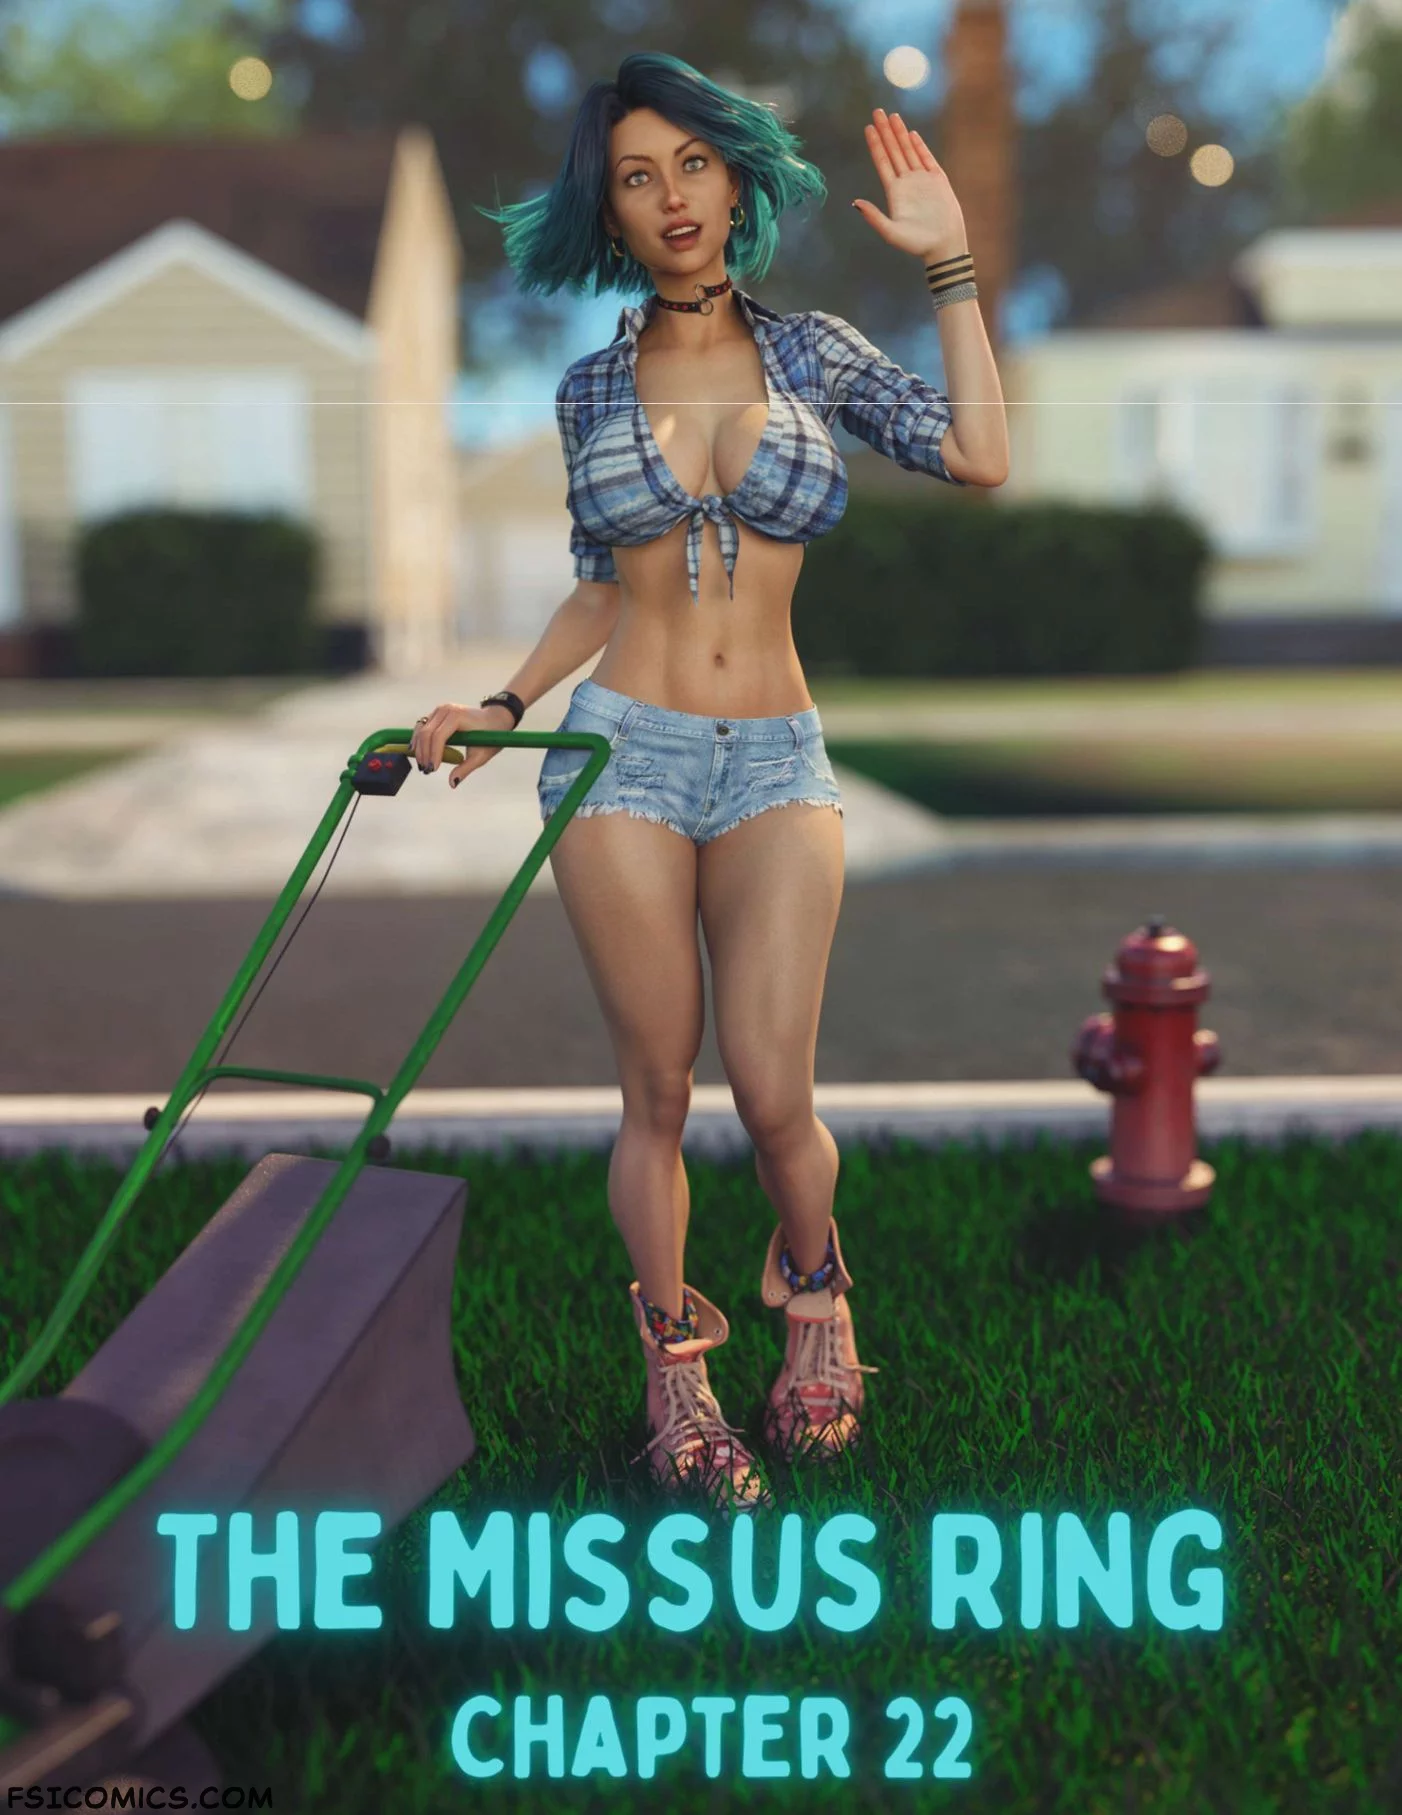 The Missus Ring Chapter 22 - Lexx228 | RawlyRawls - 95 - FSIComics